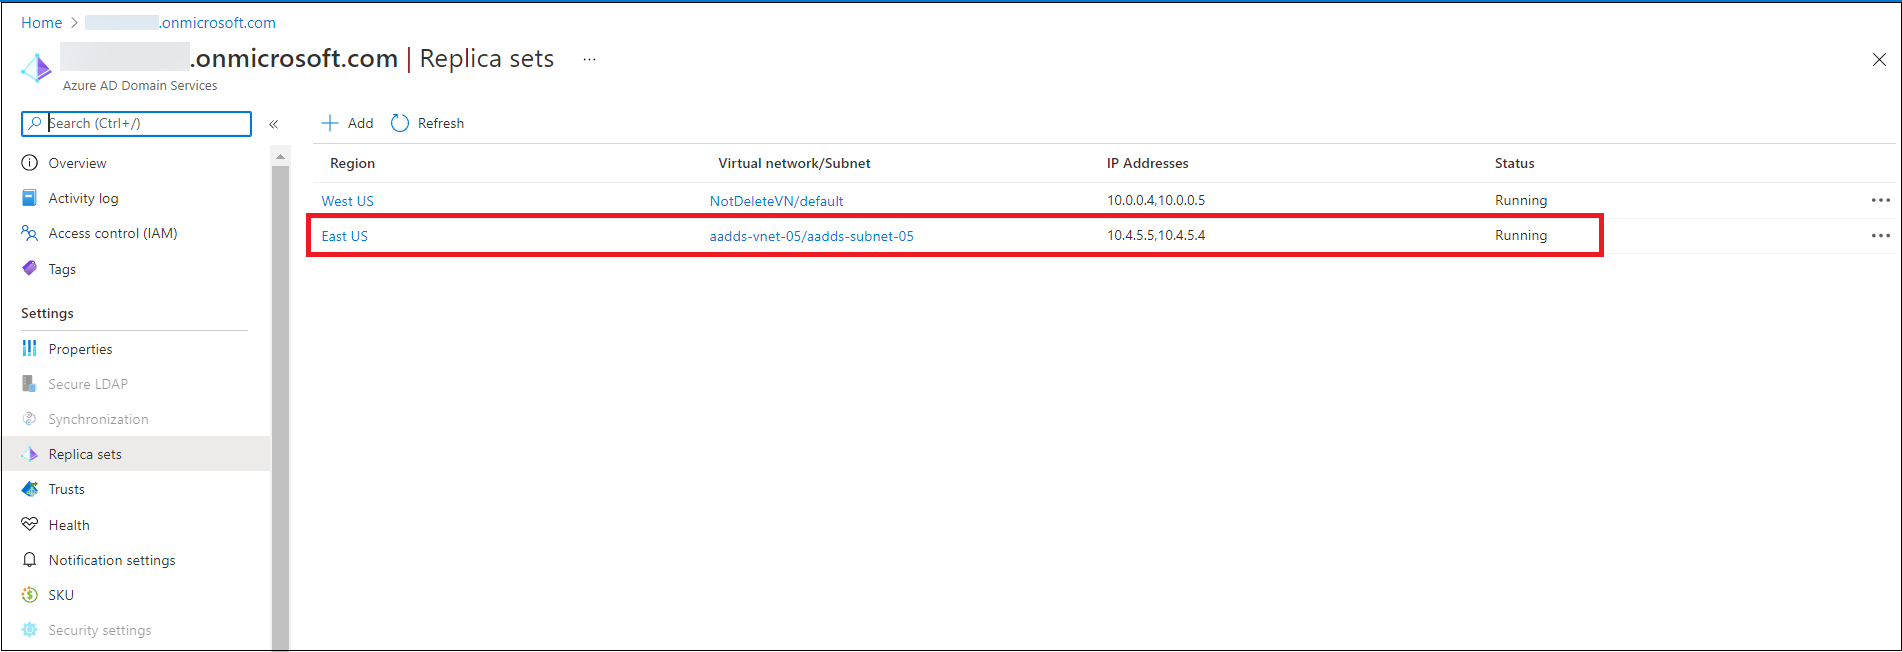 Example screenshot of replica set deployment status in the Microsoft Entra admin center